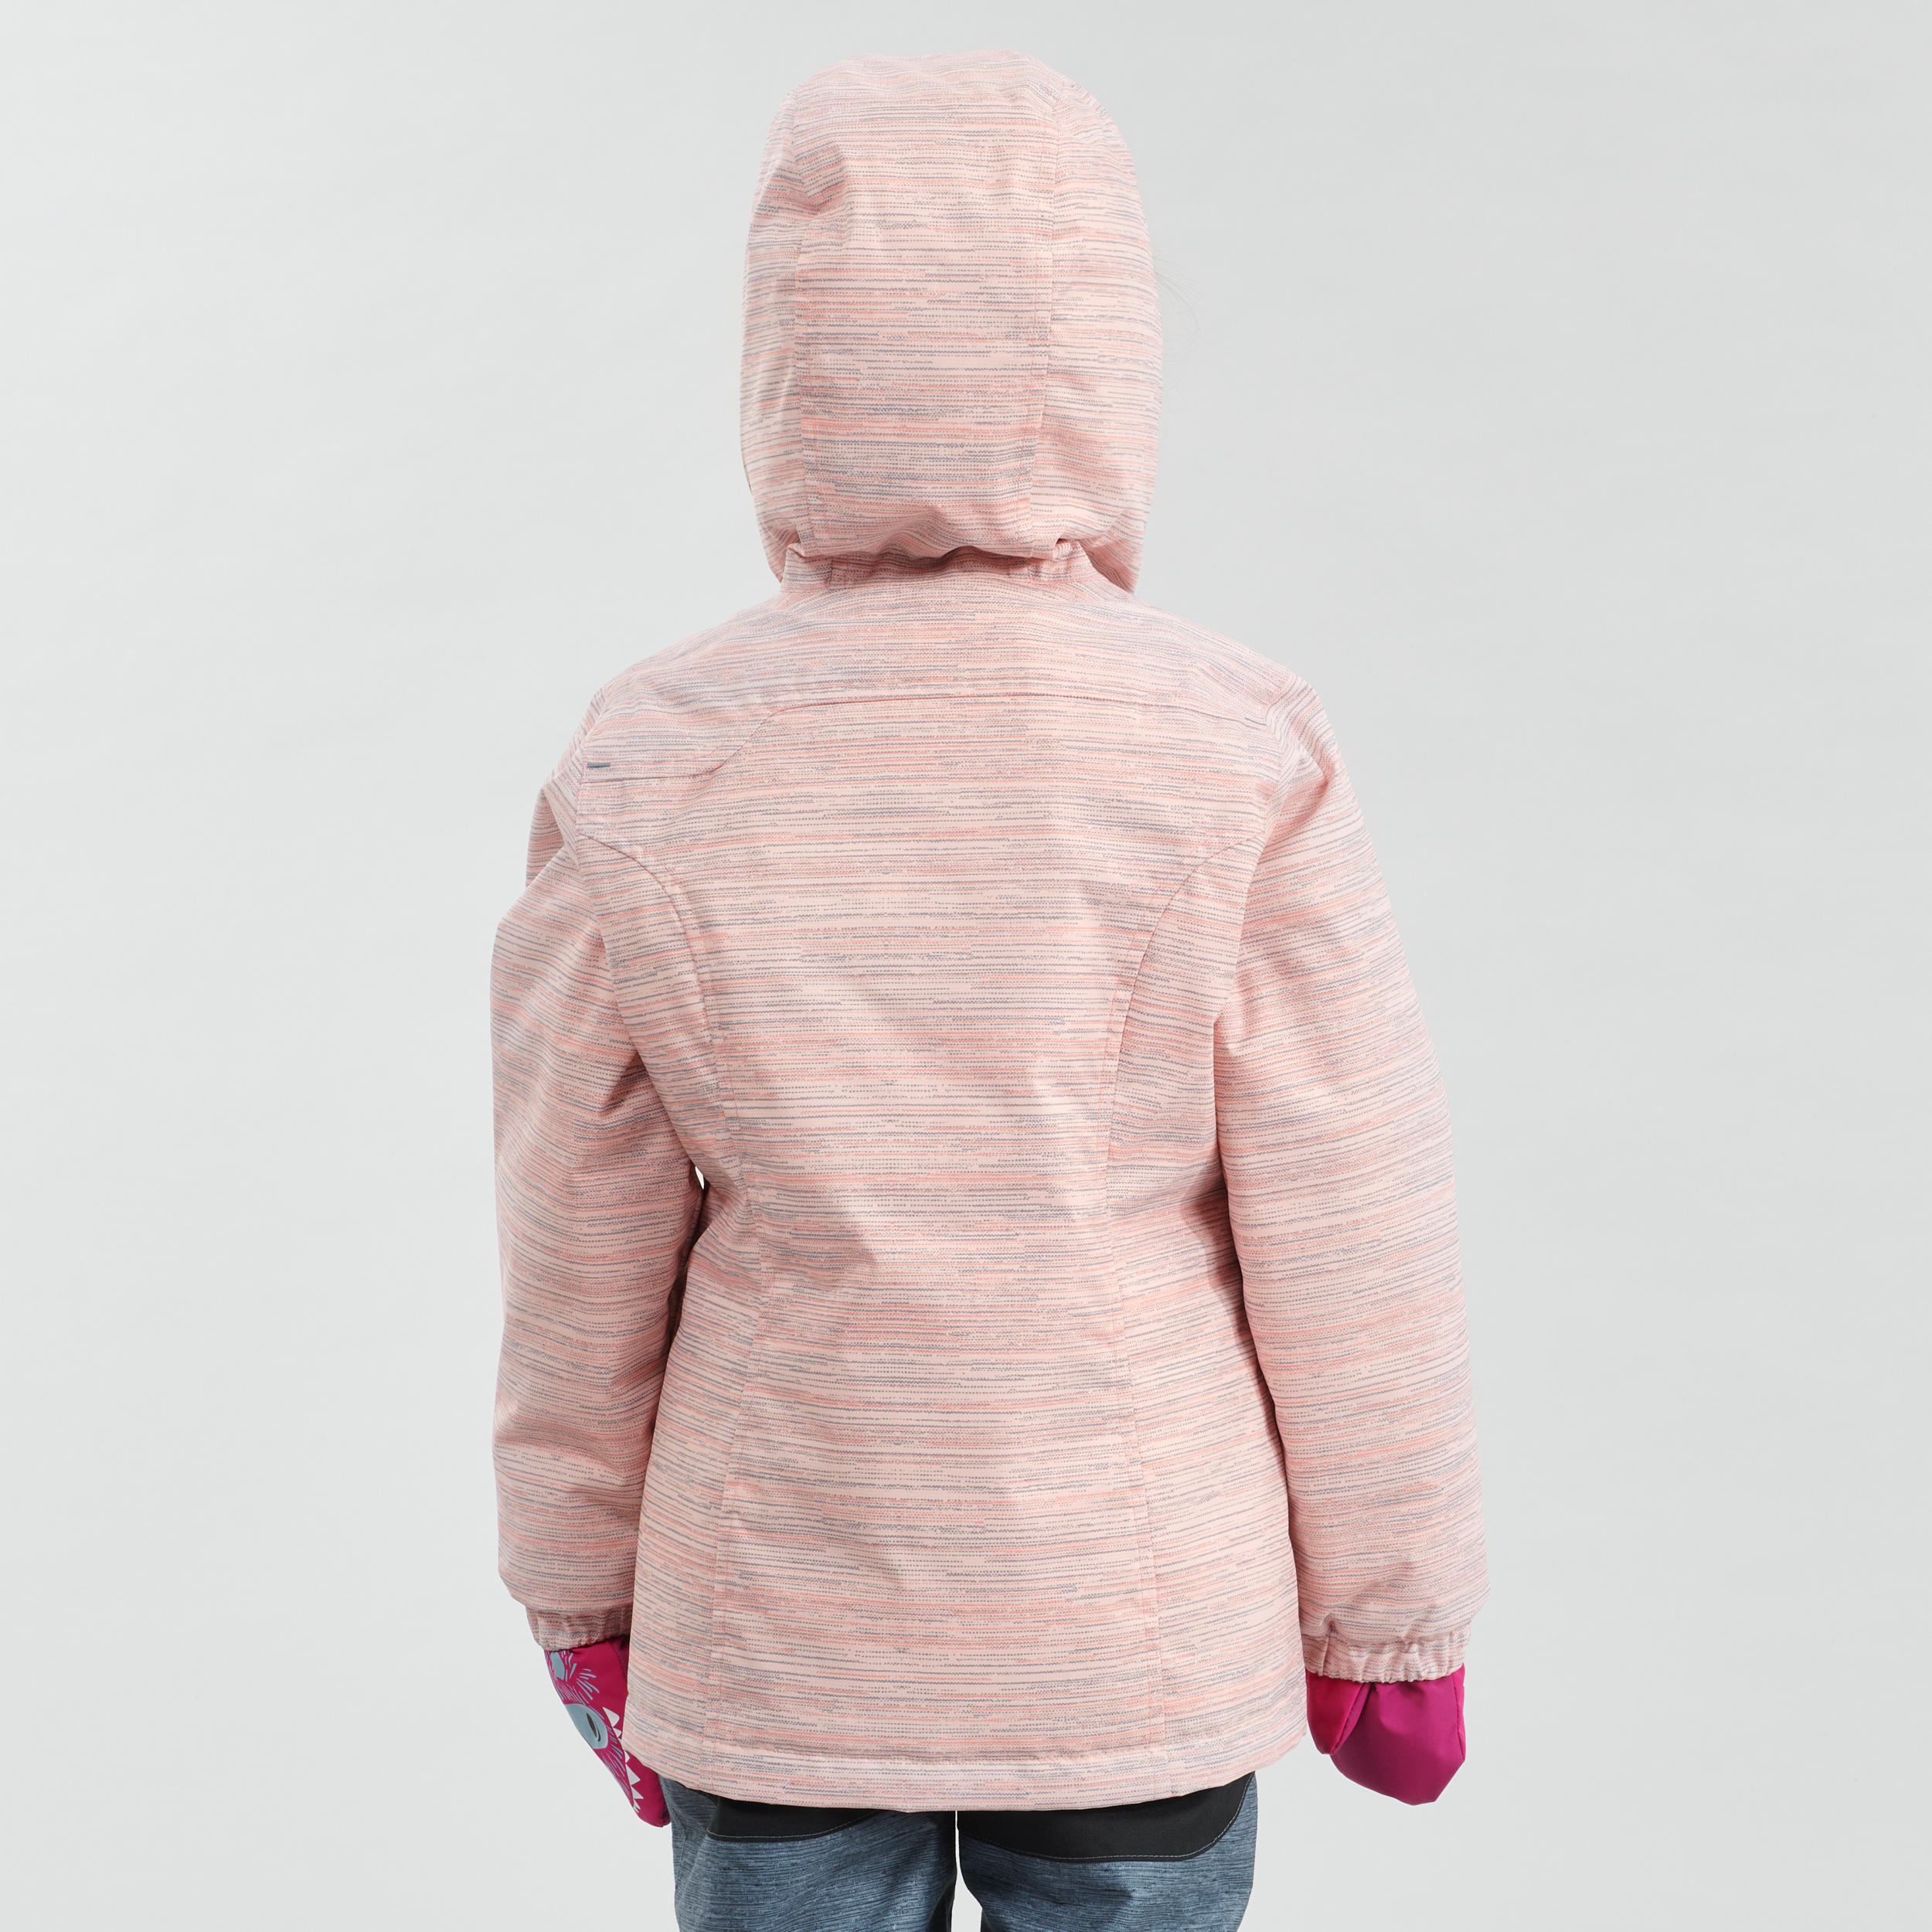 Kids’ Waterproof Winter Hiking Jacket SH100 Warm 2-6 Years 4/7